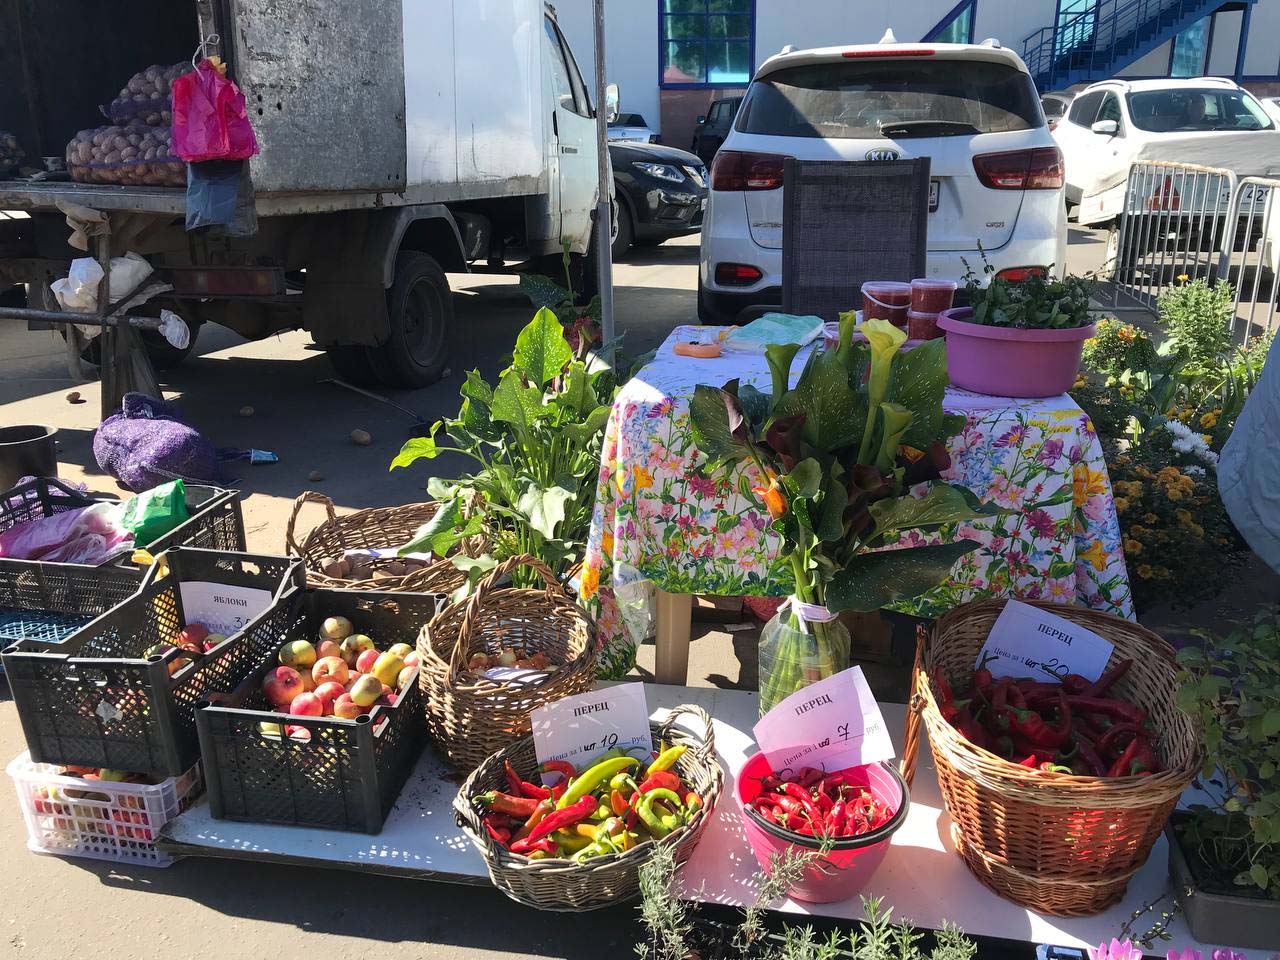 Осенние закупки пошли на спад — жители Брянска на субботней ярмарке прикупили около 75 тонн овощей и фруктов